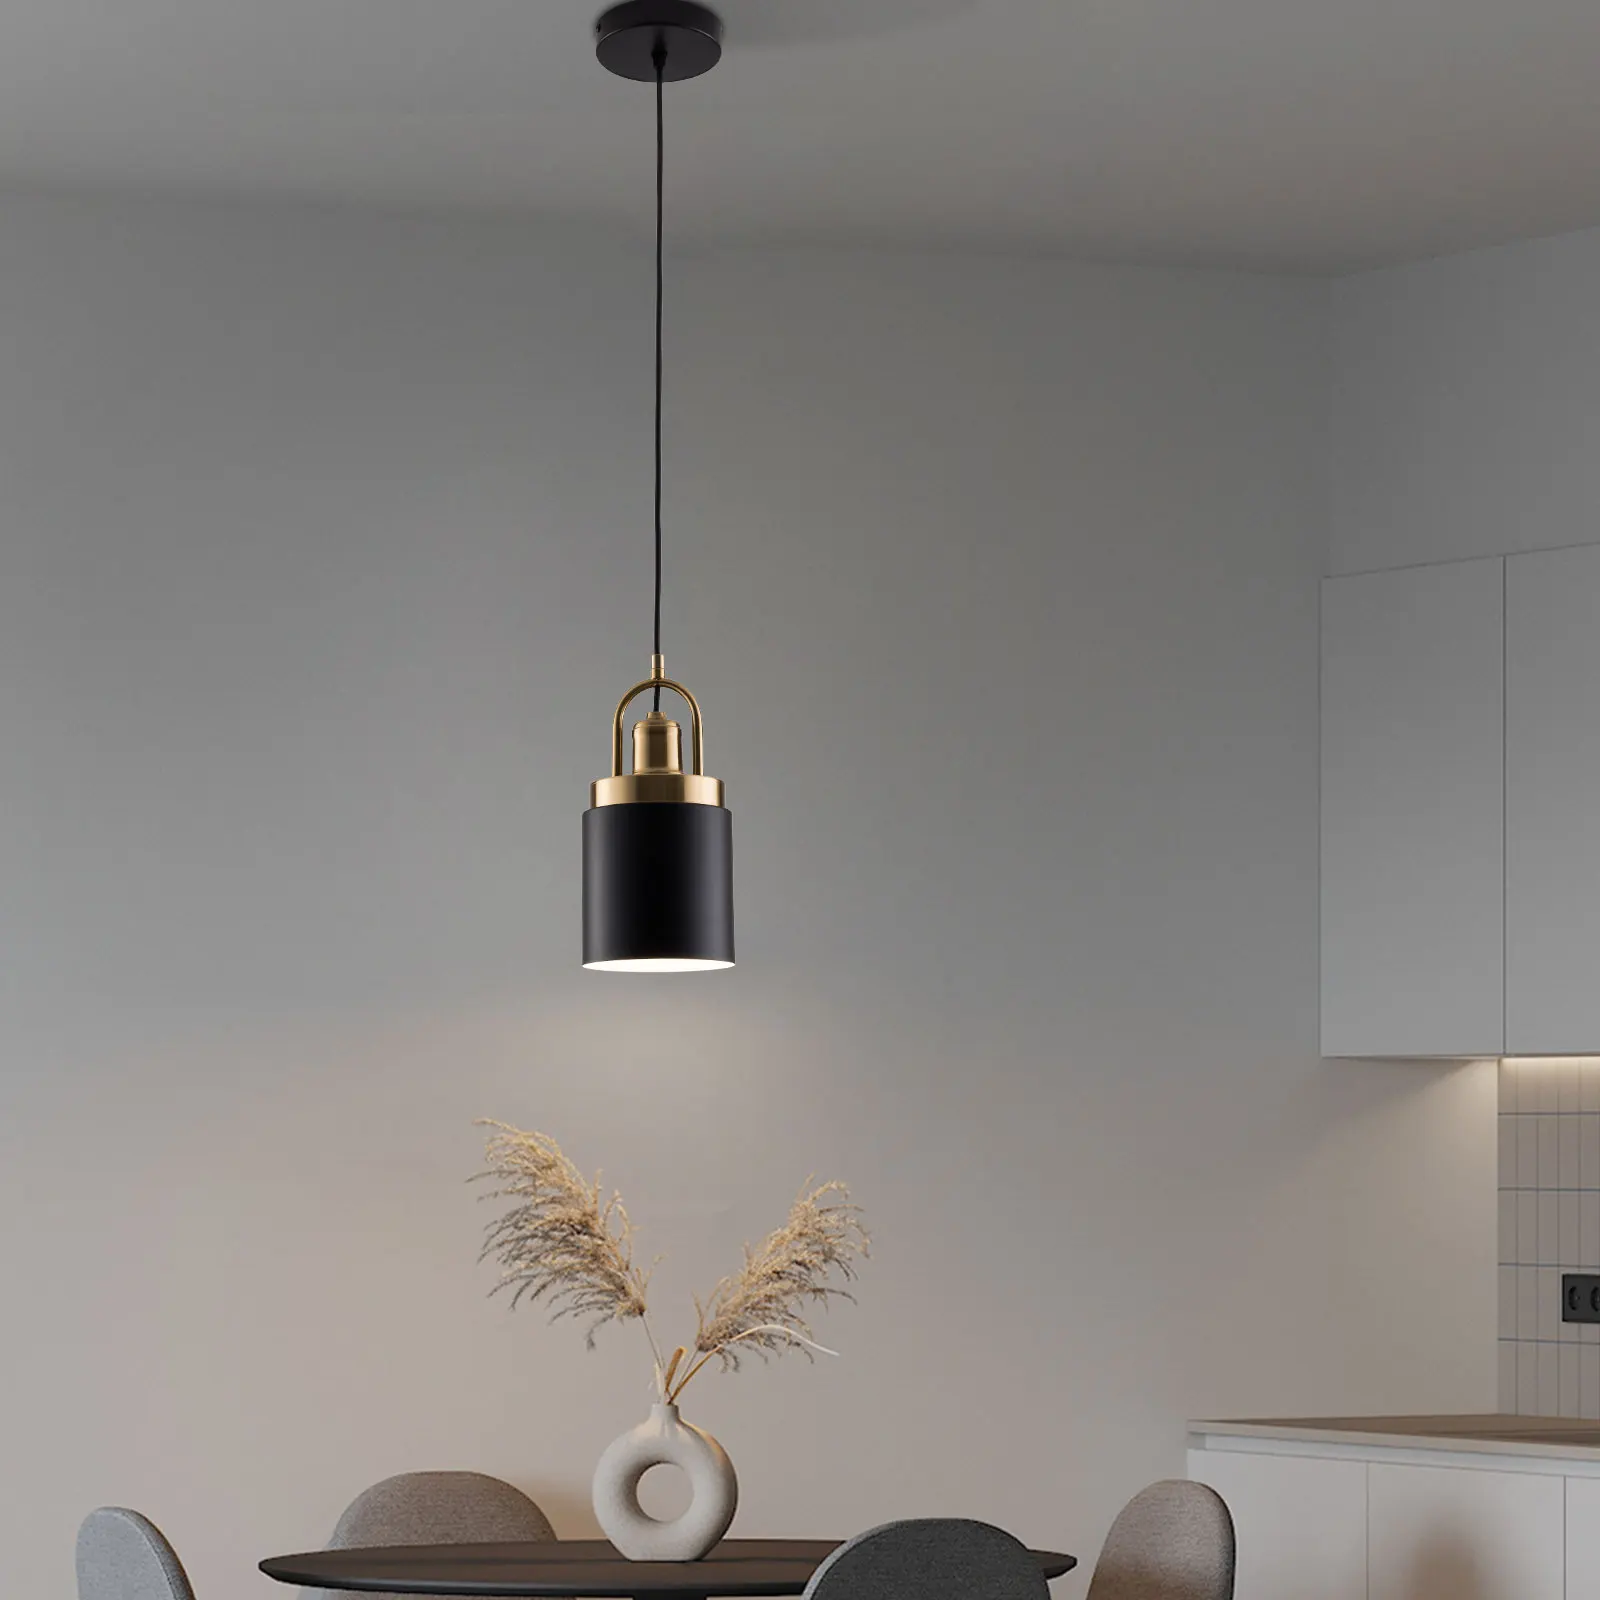 Der pendant light industrial kitchen hanging light fixture home decoration for cafe bar thumb200